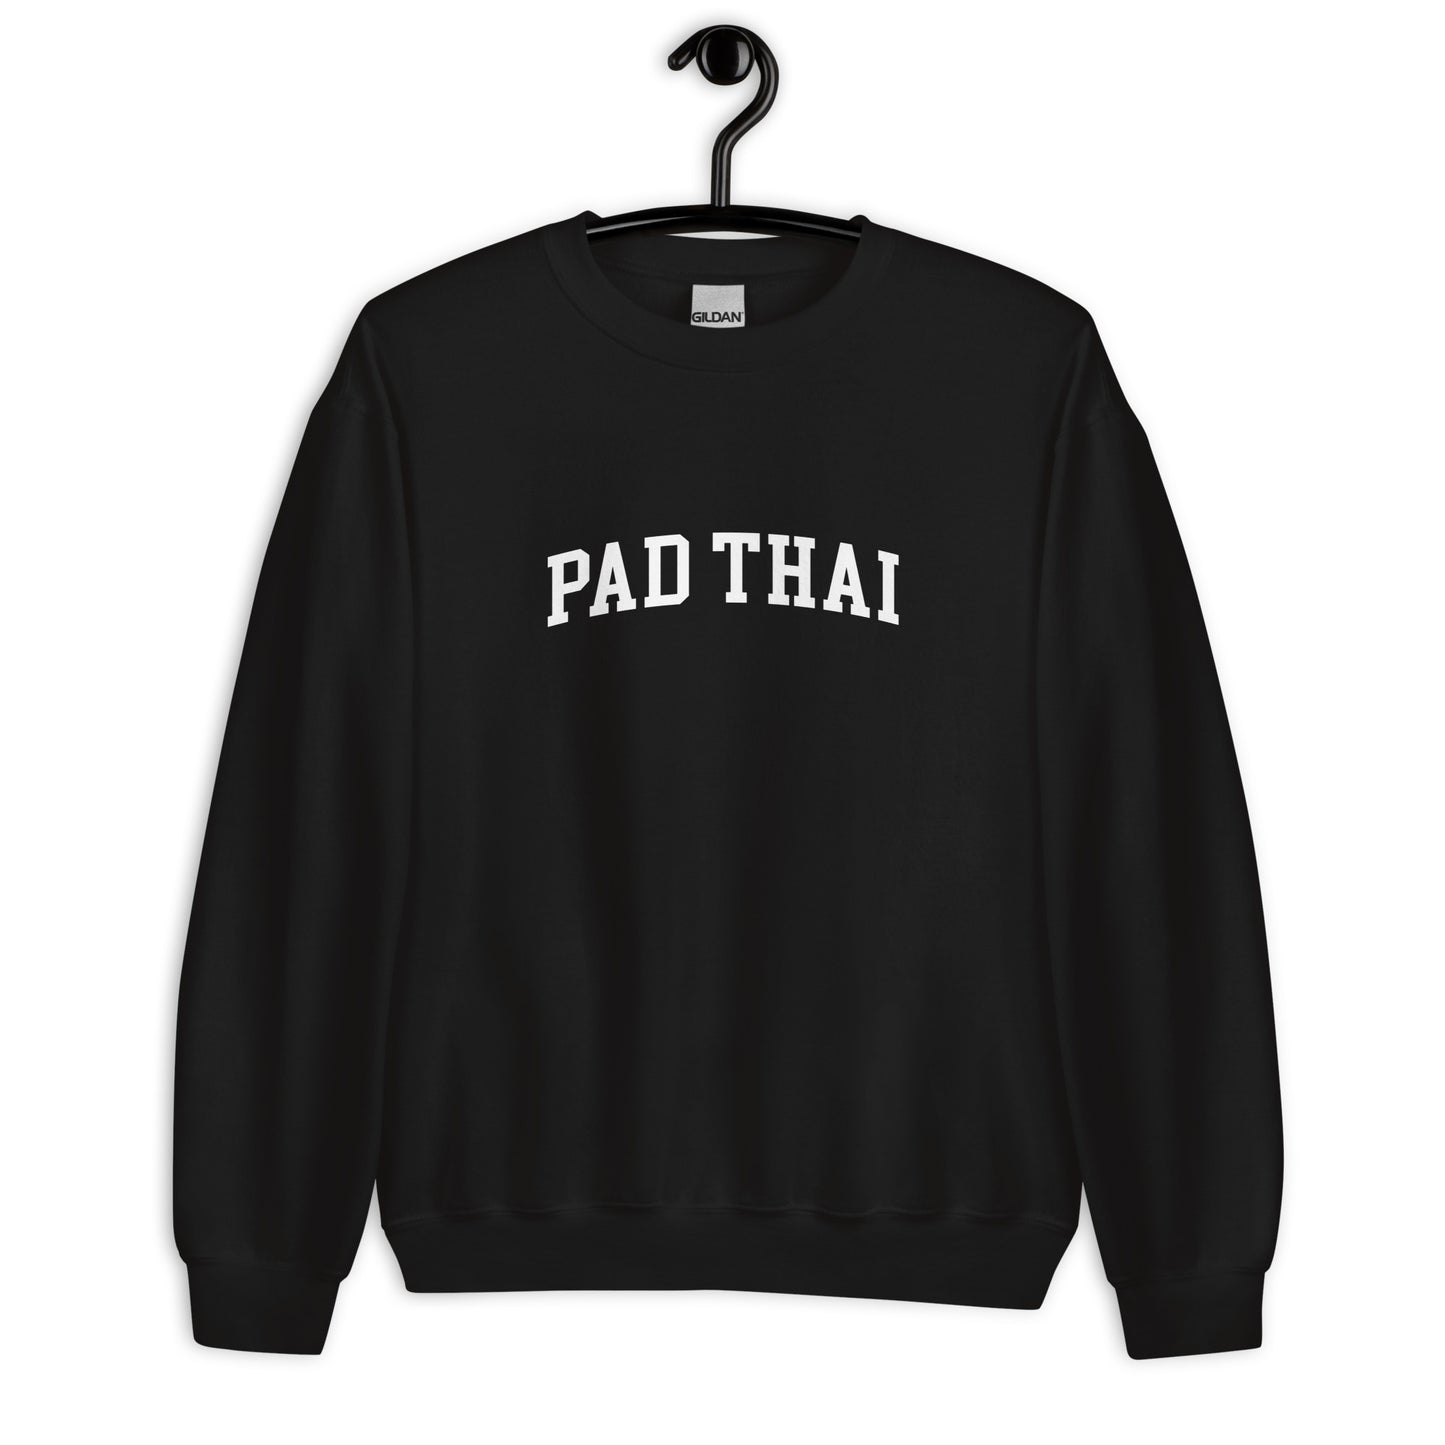 Pad Thai Sweatshirt - Arched Font